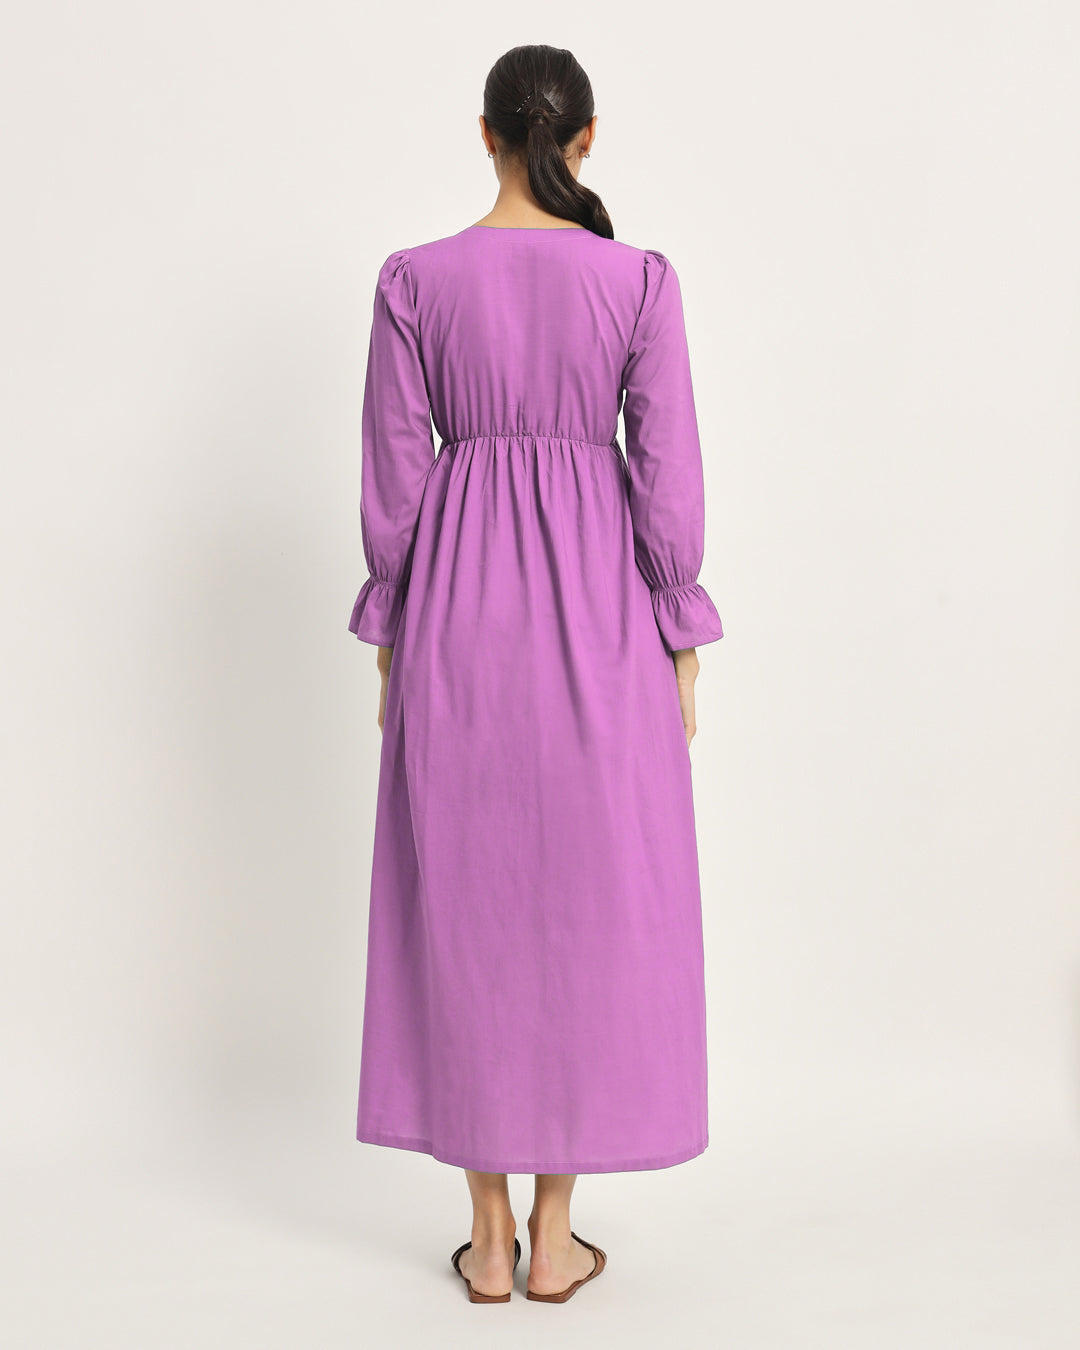 Combo: Lilac & Wisteria Purple Glowing Bellies Maternity & Nursing Dress- Set of 2